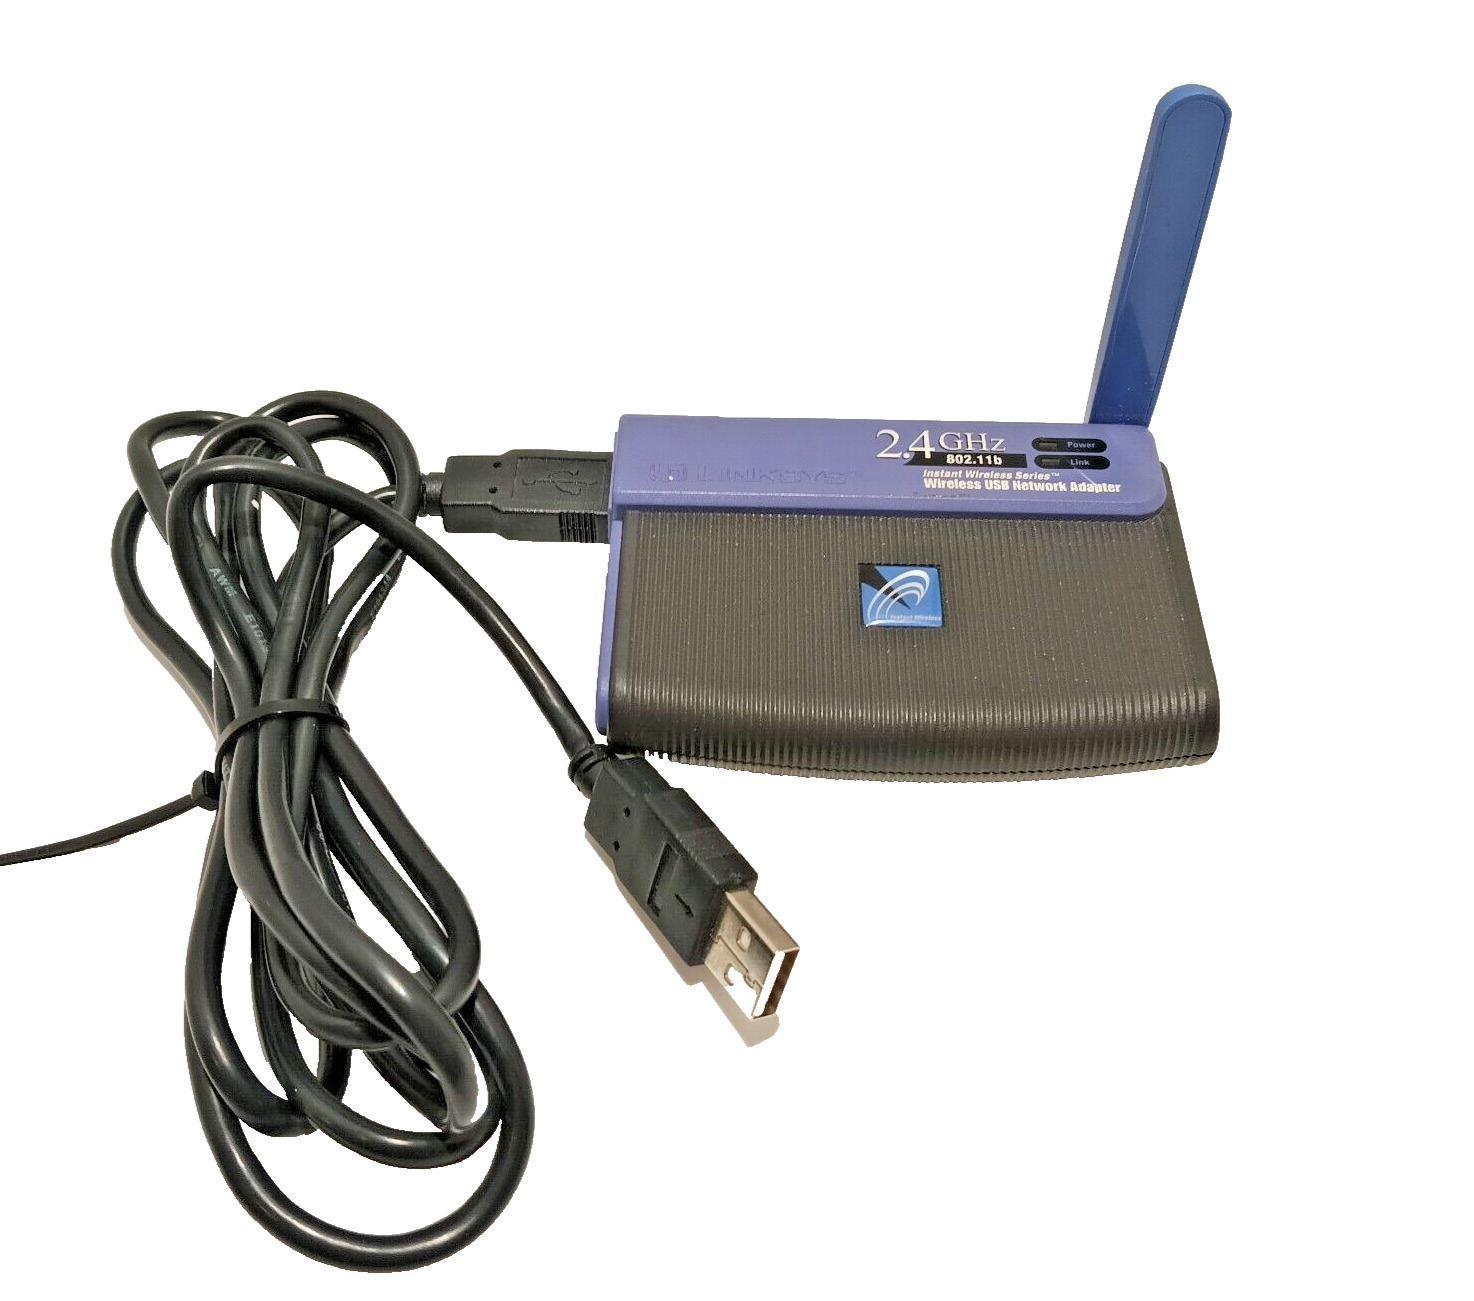 Linksys WUSB11 Ver 2.6 Wireless USB Network  Adapter.